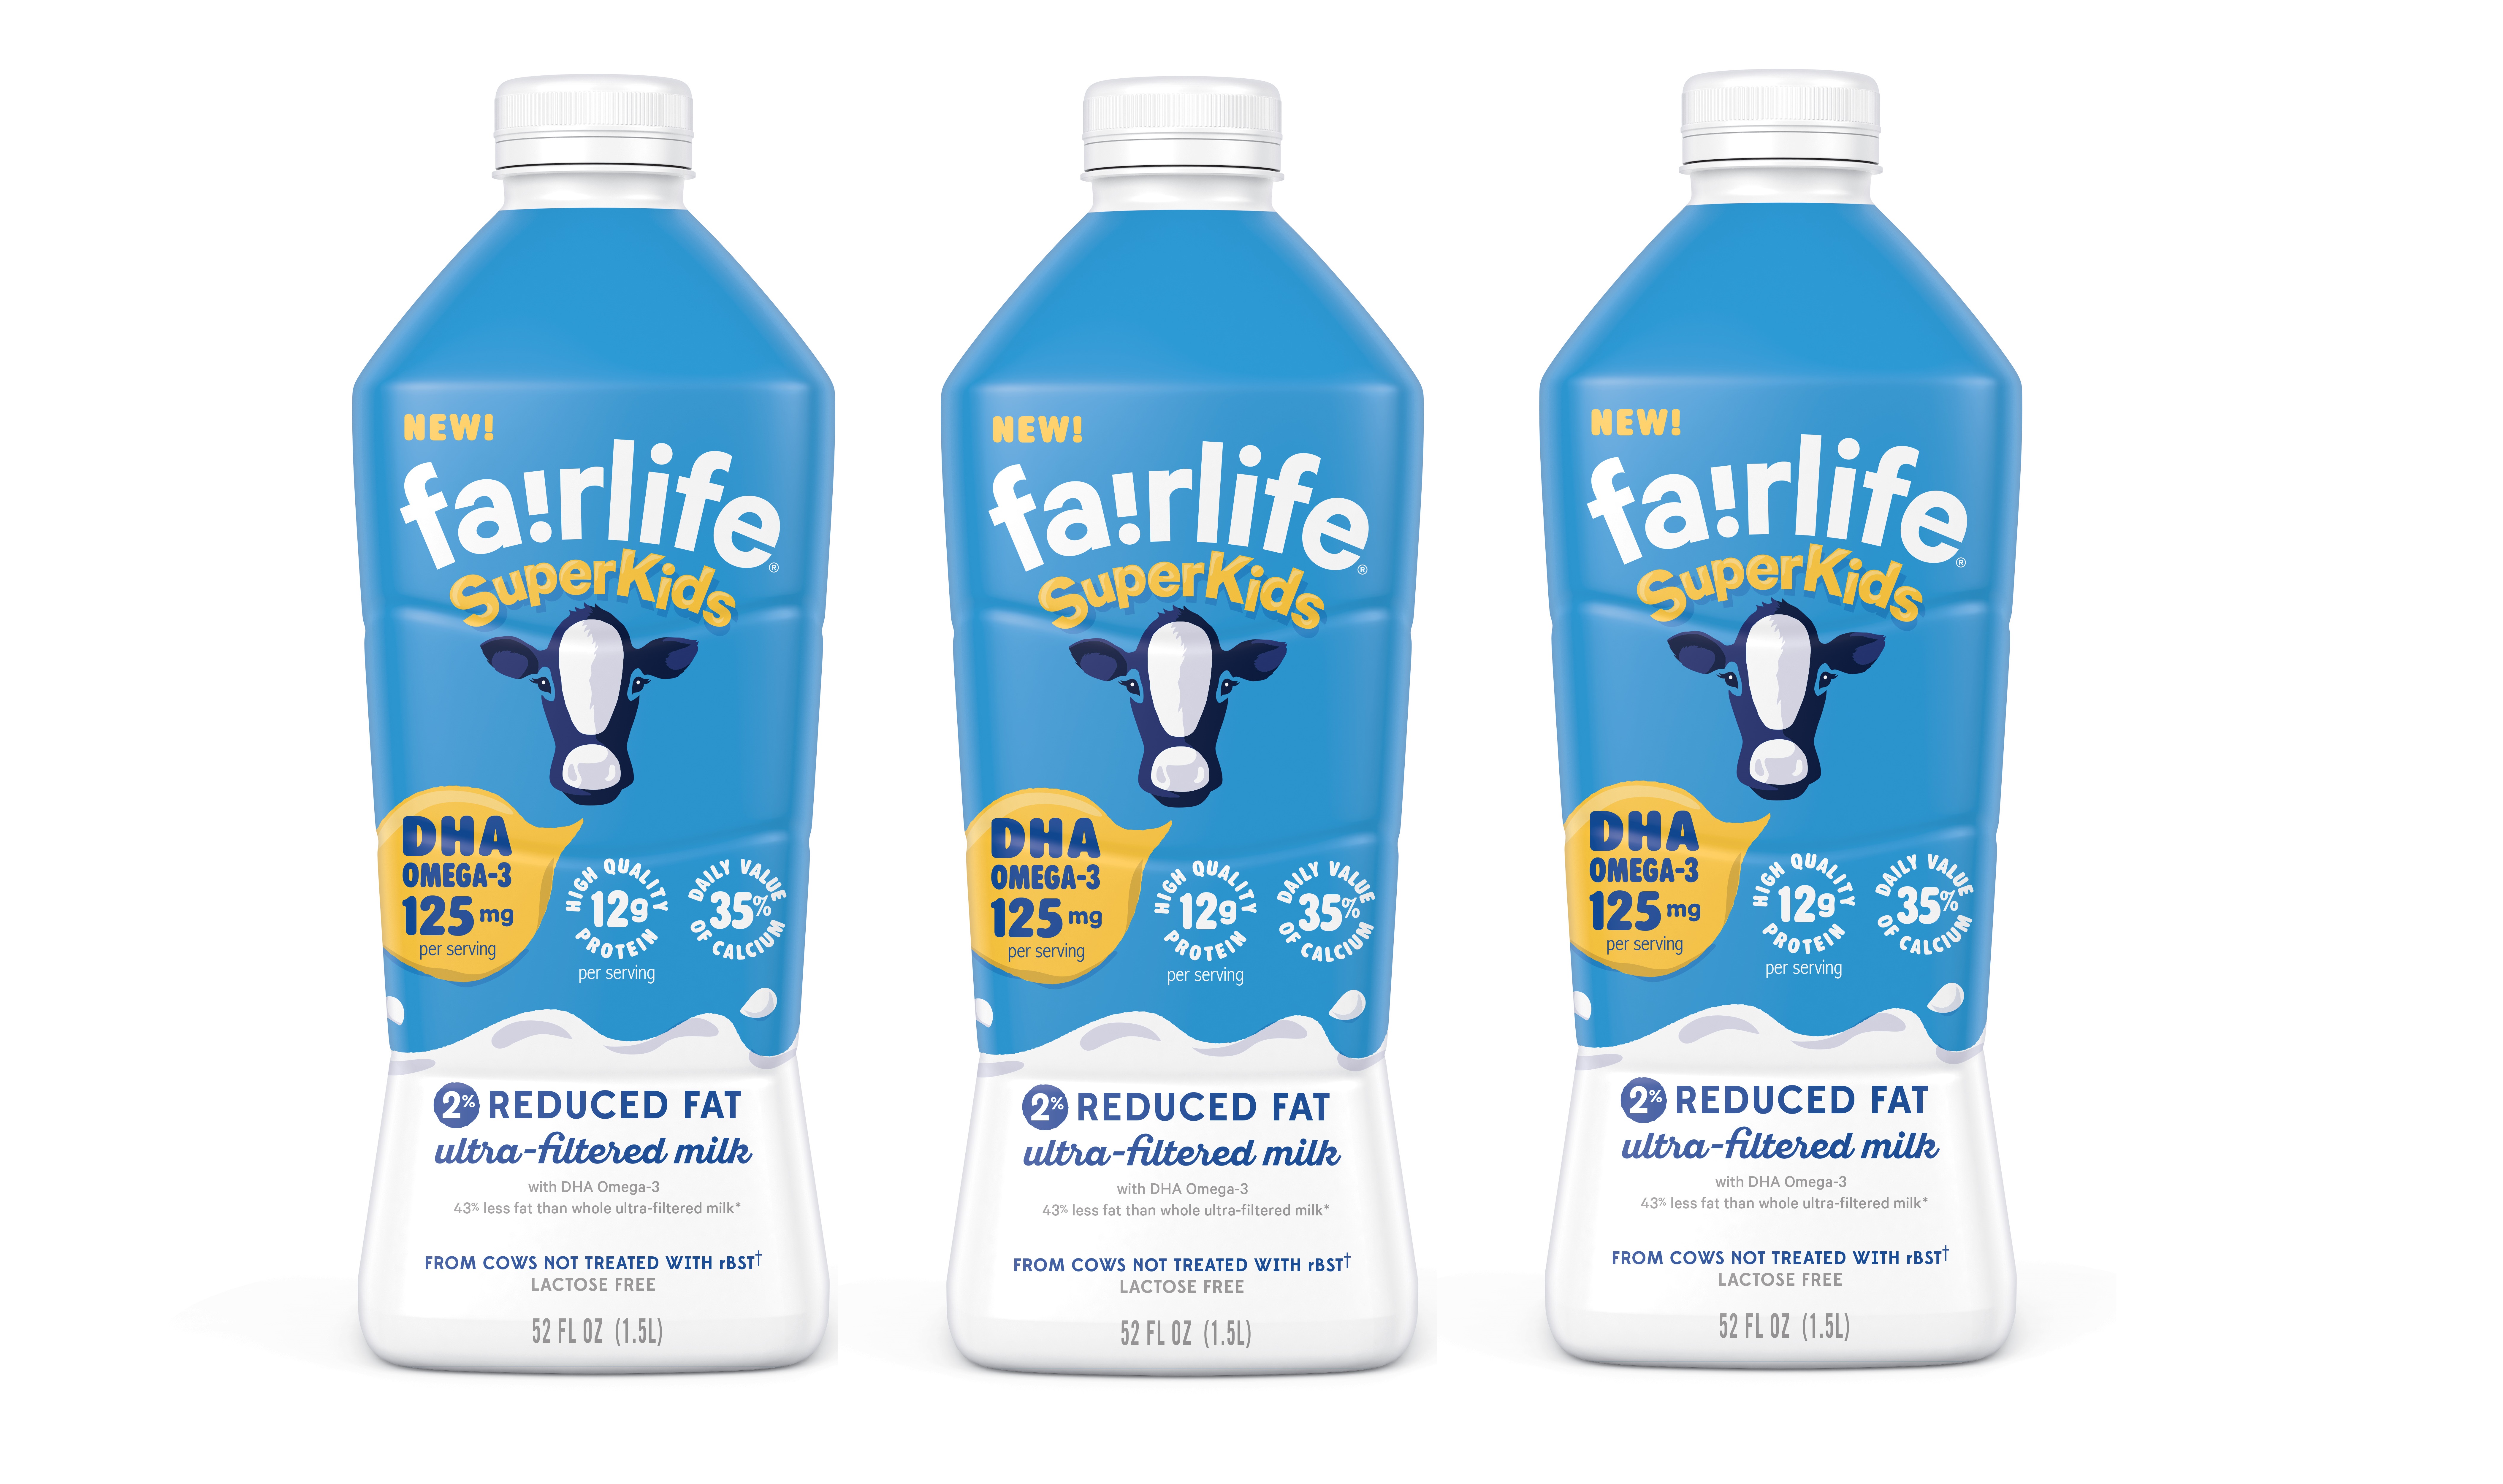 https://www.beveragedaily.com/var/wrbm_gb_food_pharma/storage/images/5/9/1/4/2744195-1-eng-GB/Coca-Cola-s-fairlife-launches-children-s-Superkids-milk.jpg